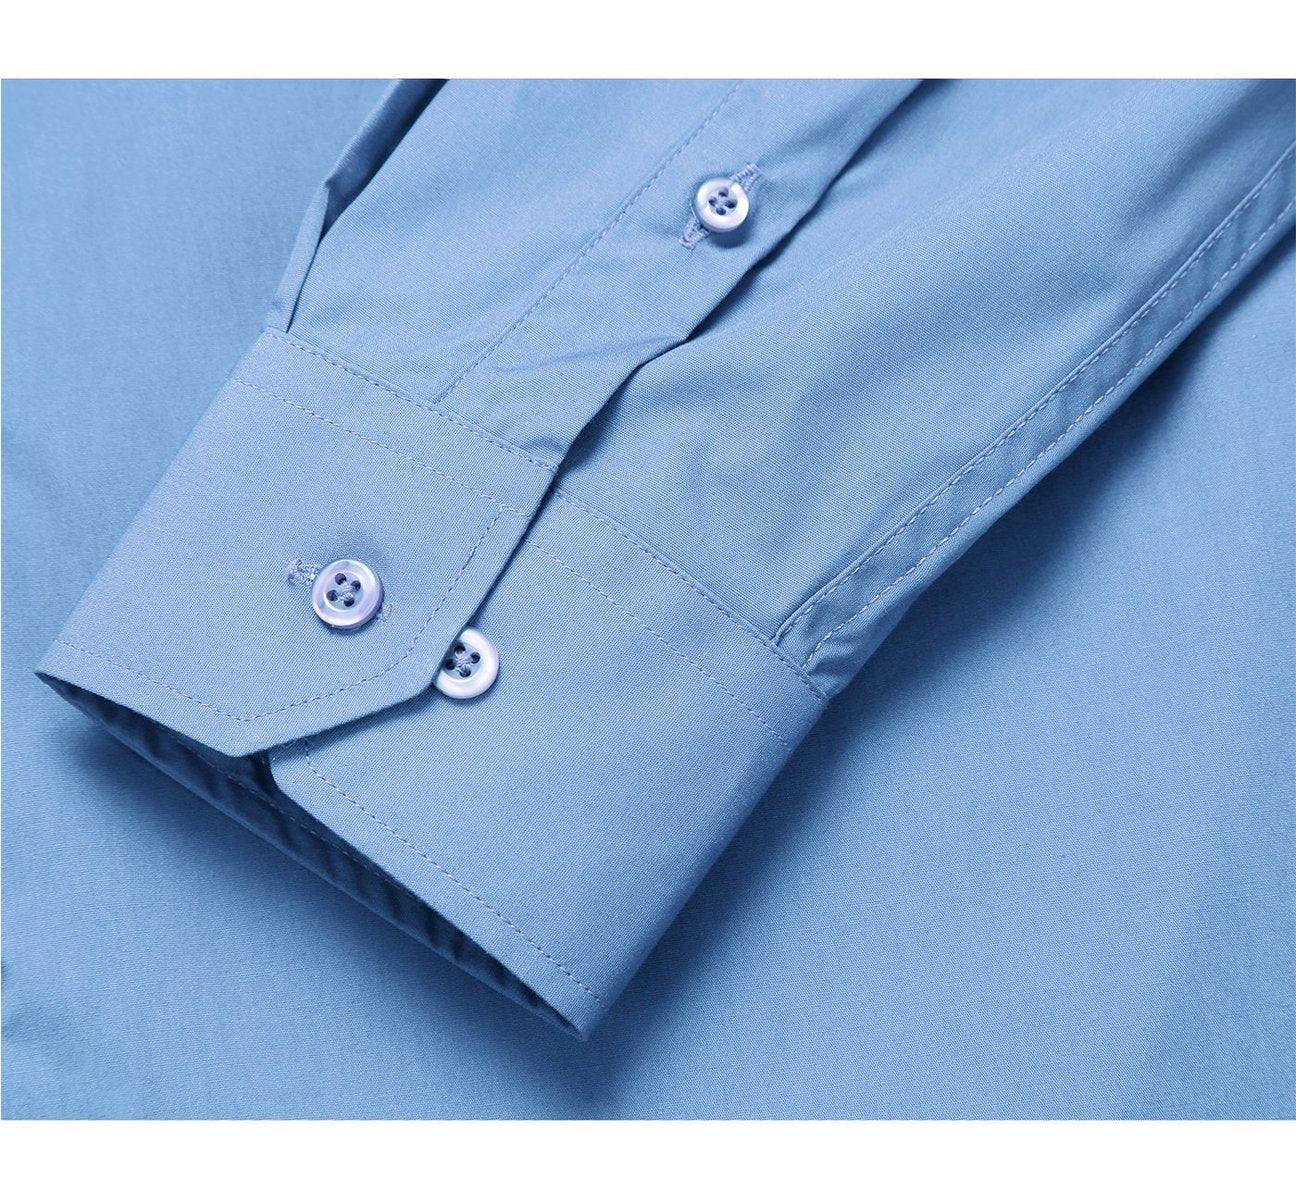 RENOIR Light Blue Classic/Regular Fit Long Sleeve Spread Collar Dress Shirt TC627